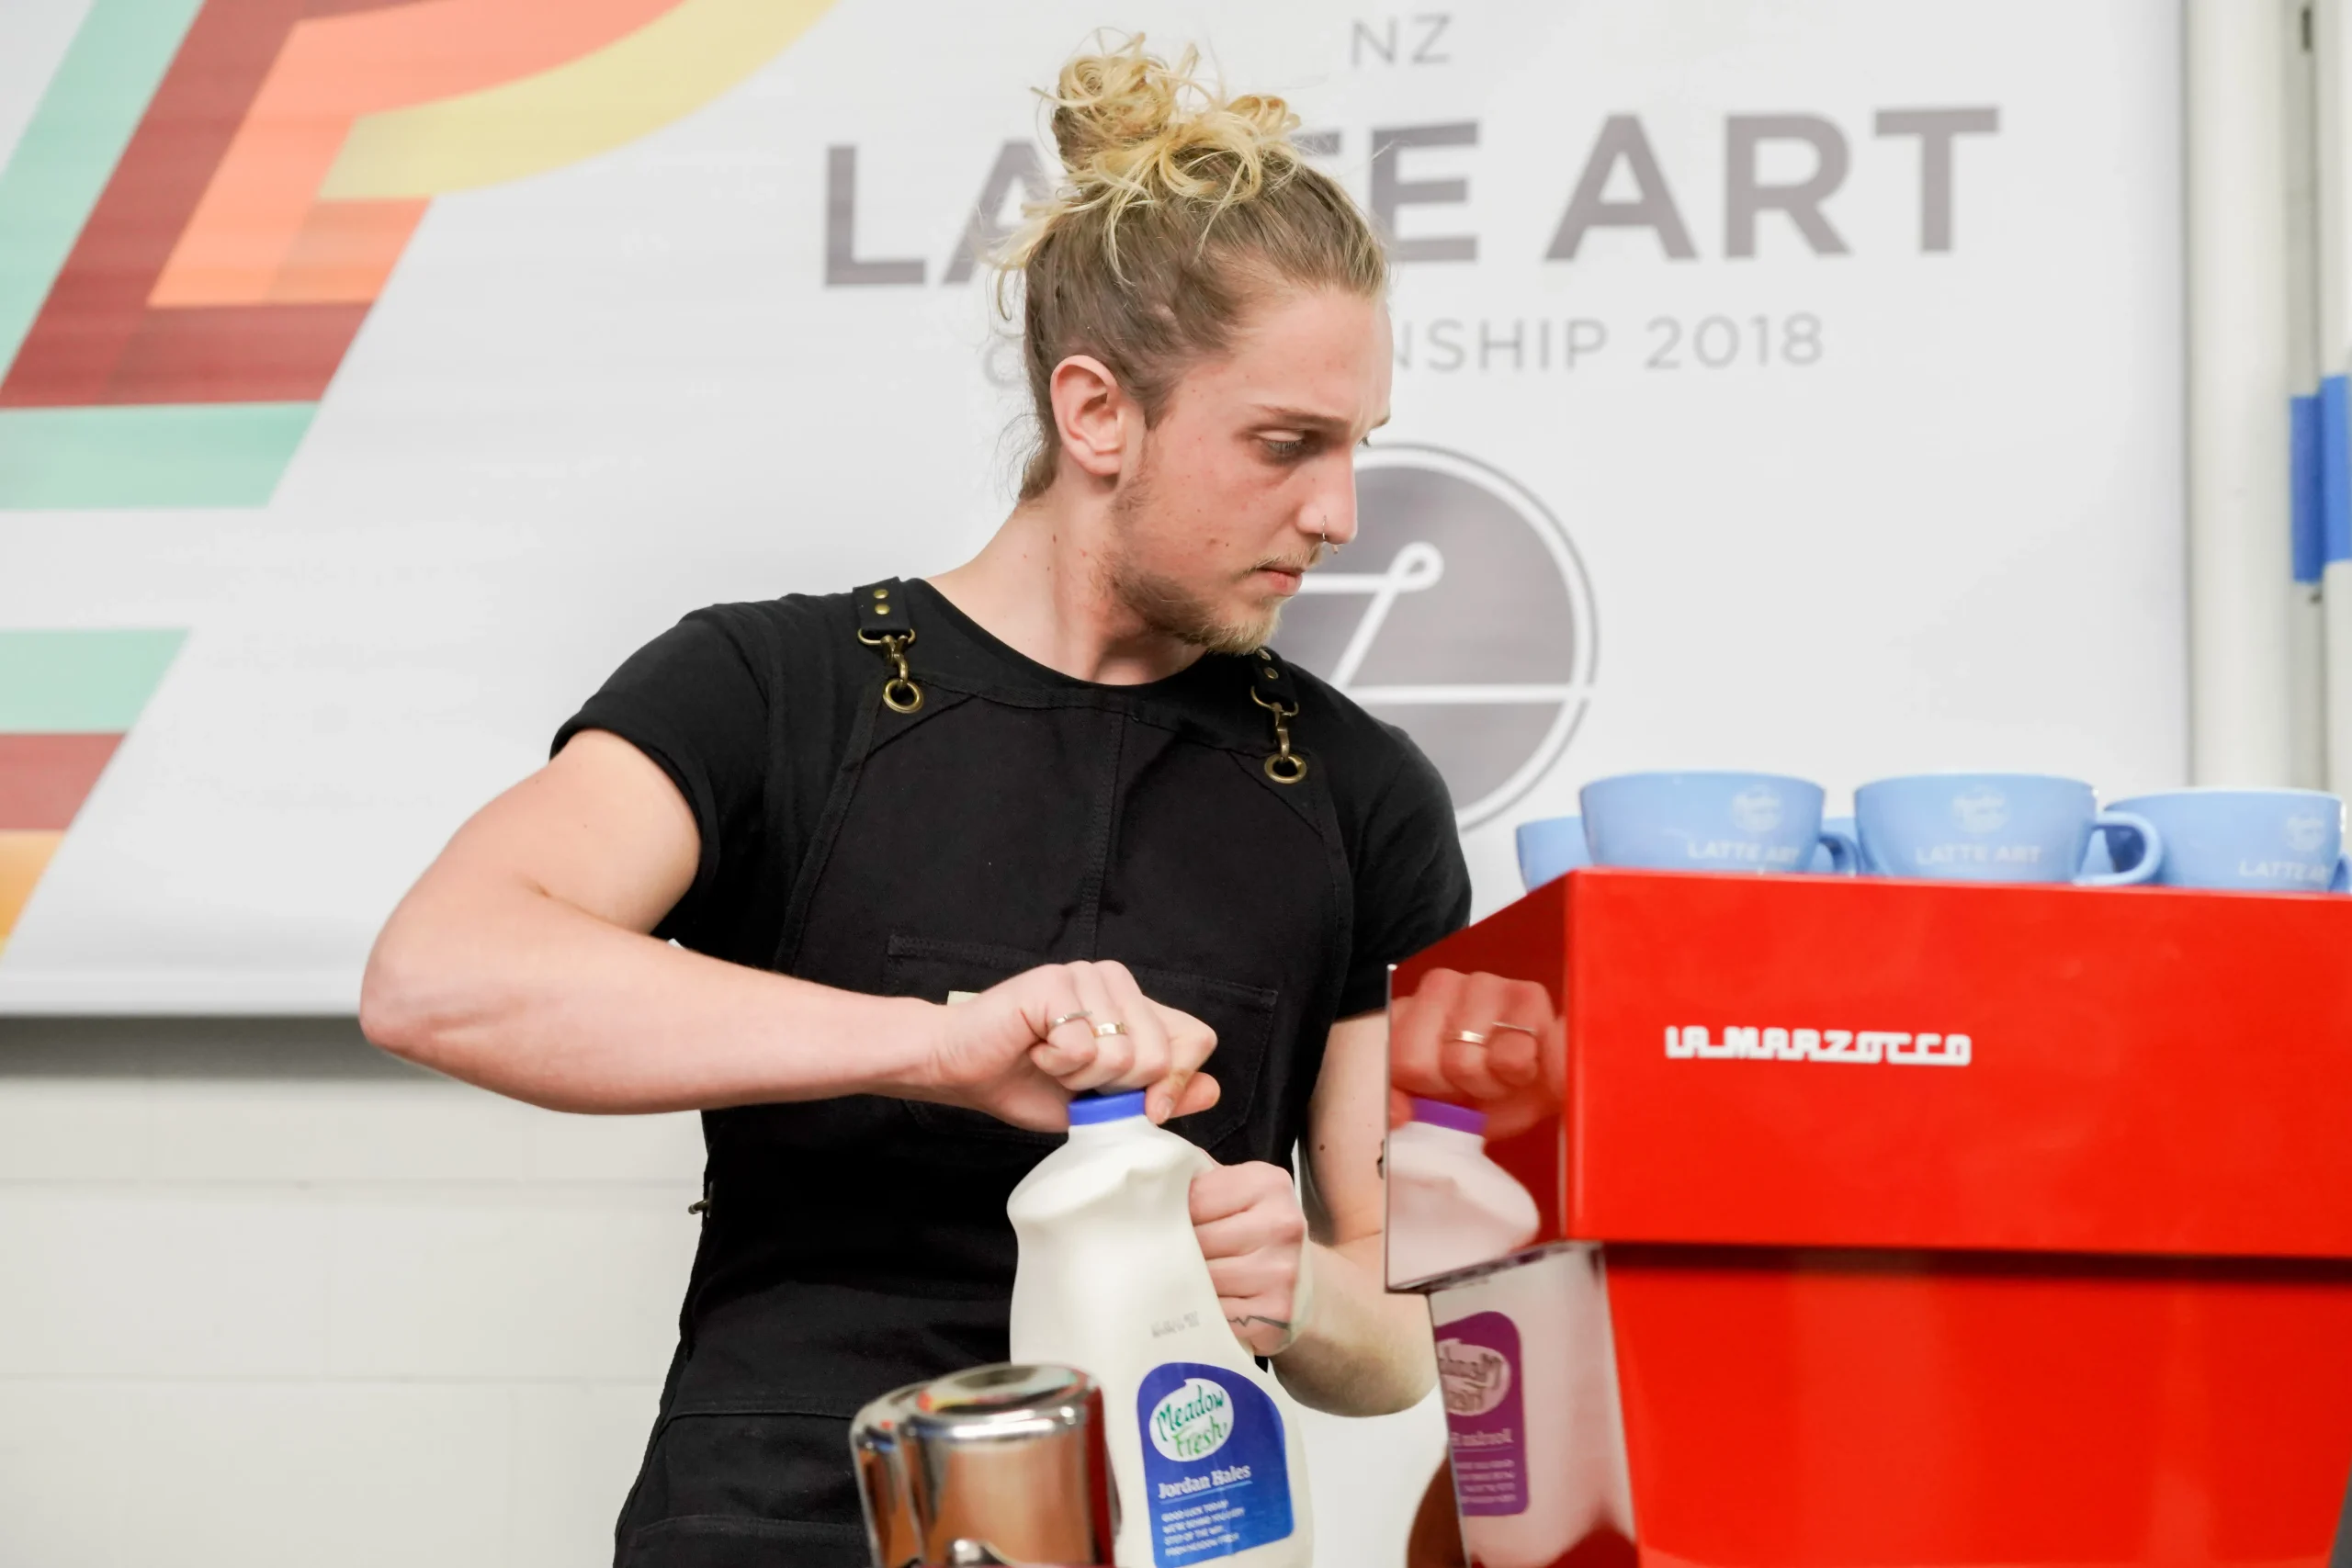 latte art championships - 2018